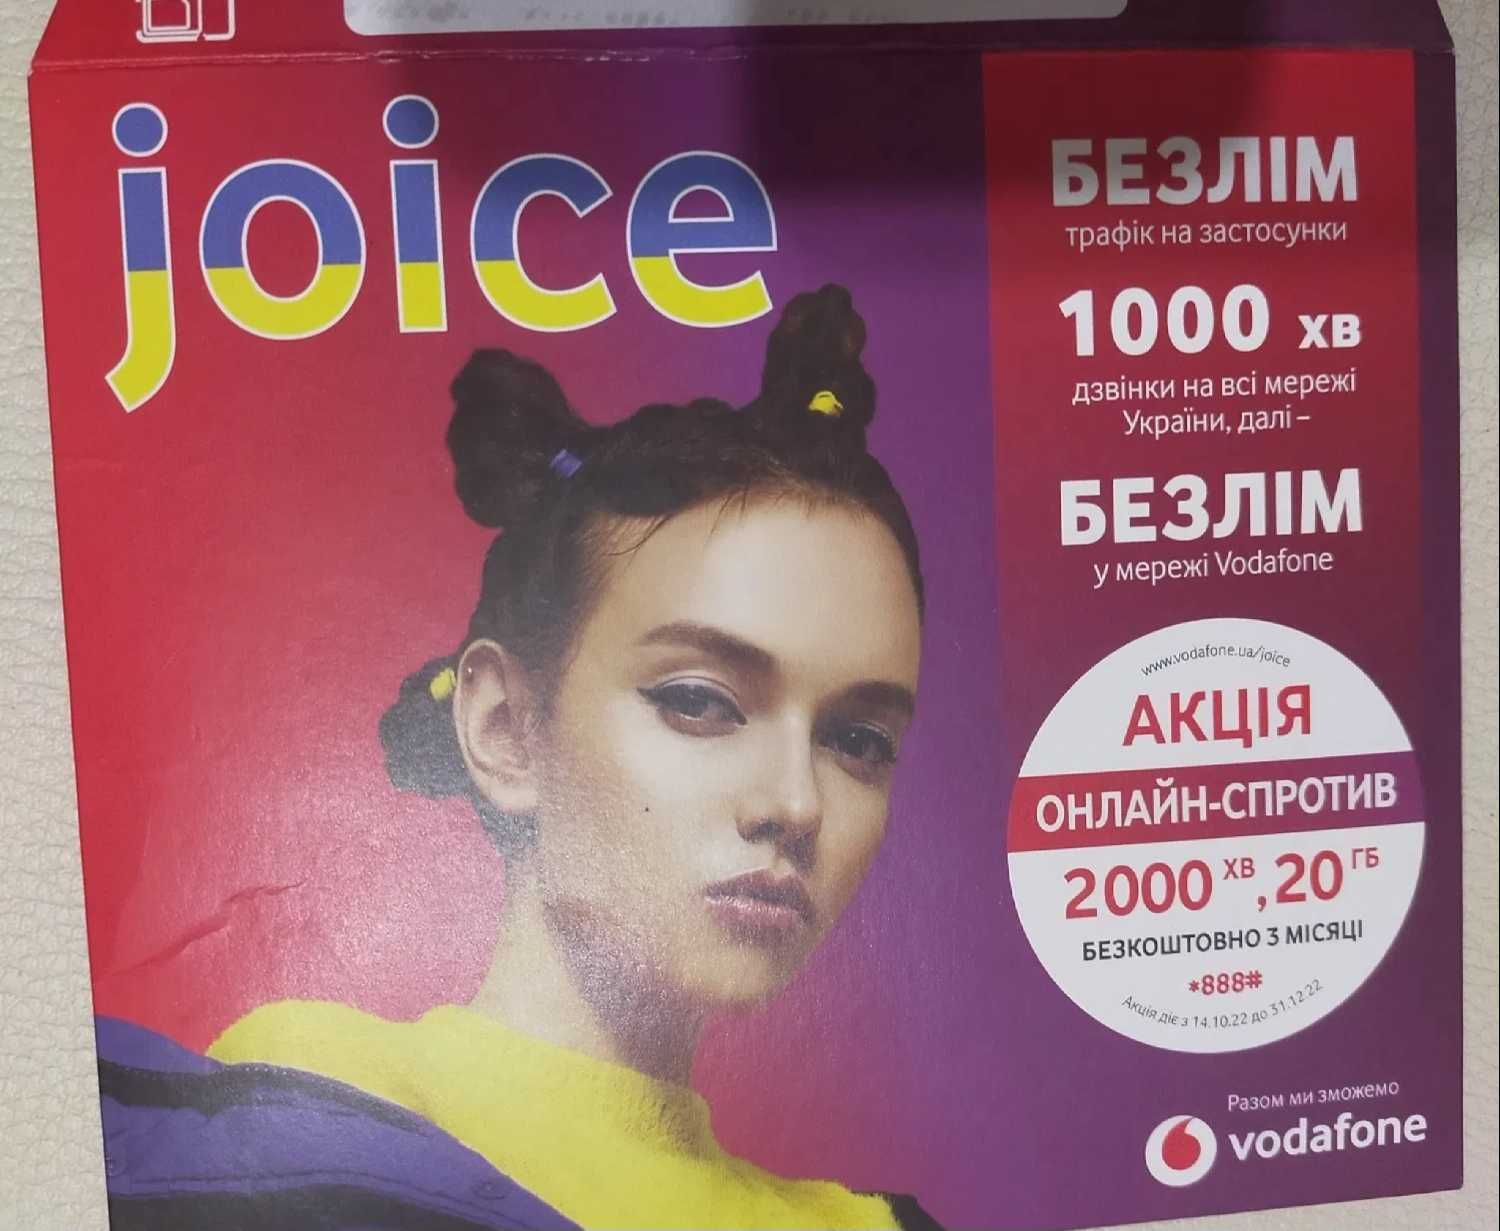 Золотой номер Vodafone "Joice"